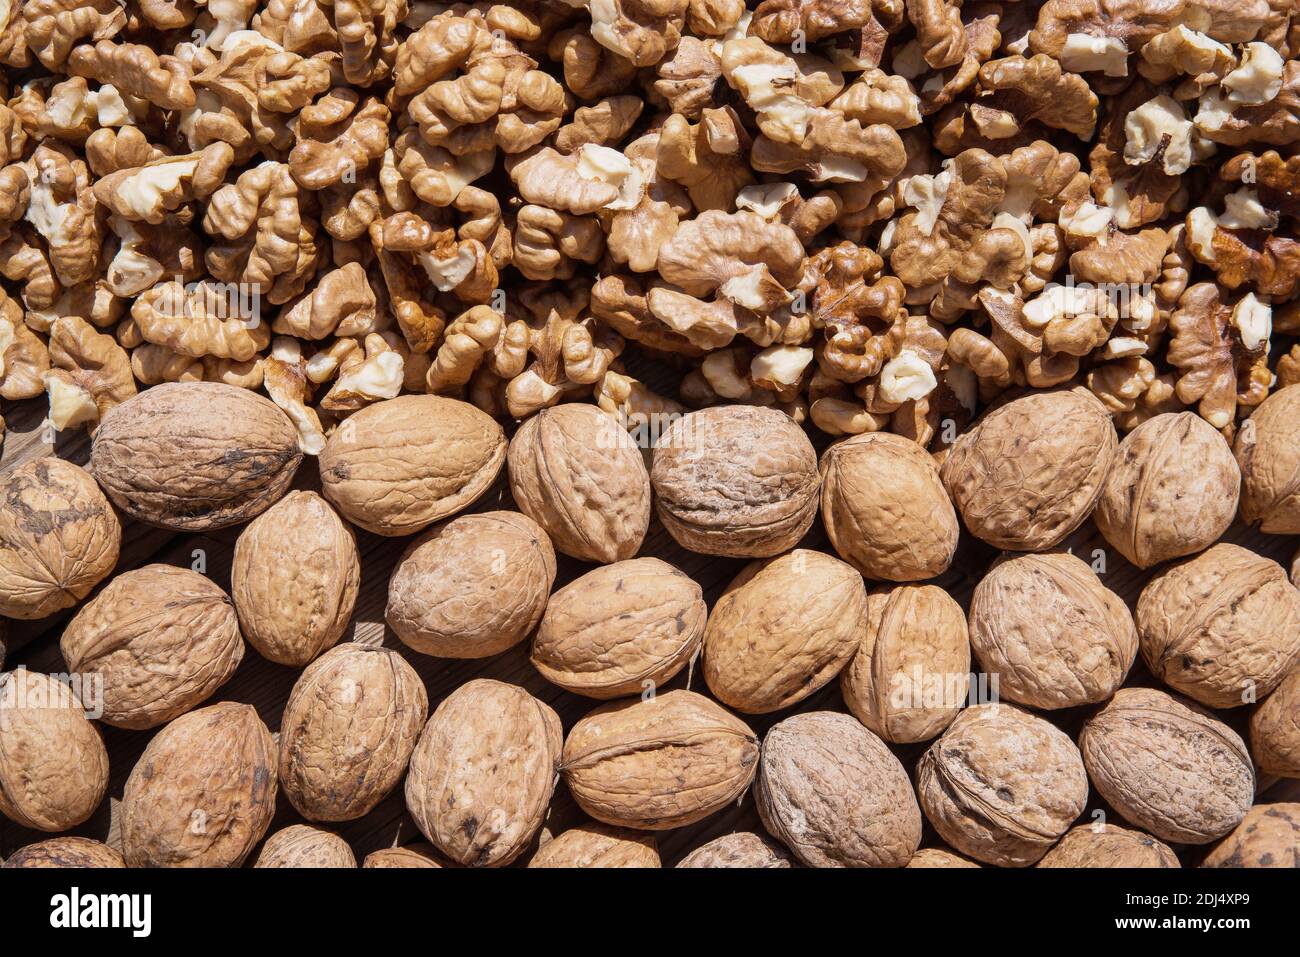 Walnut kernels and whole walnuts Stock Photo